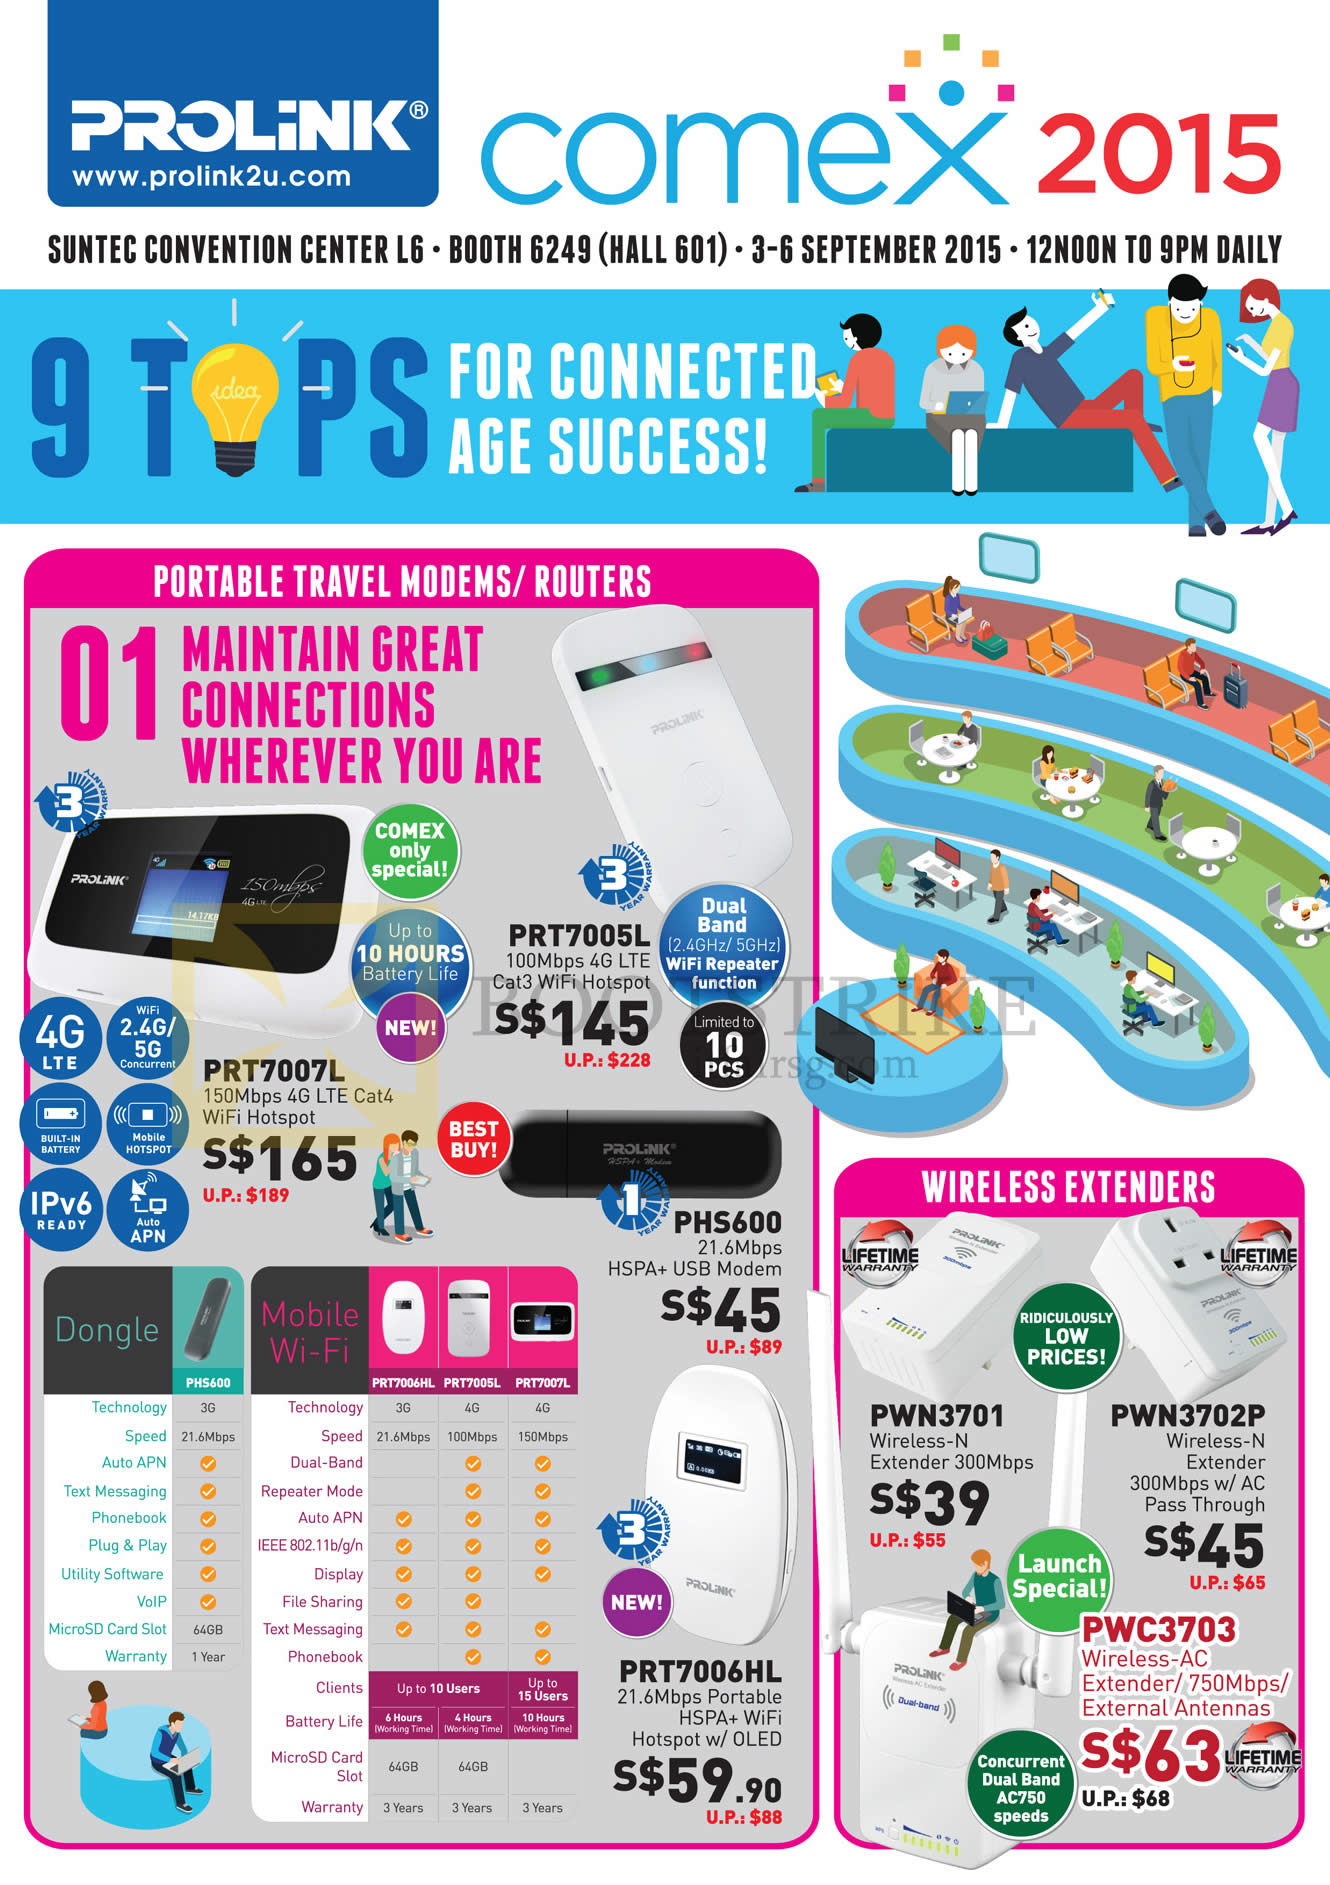 COMEX 2015 price list image brochure of Prolink Portable Travel Modems, Routers, Wireless Extenders, PRT7007L, PRT7005L, PHS600, PRT7006HL, PWN3701, PWN3702P, PWC3703